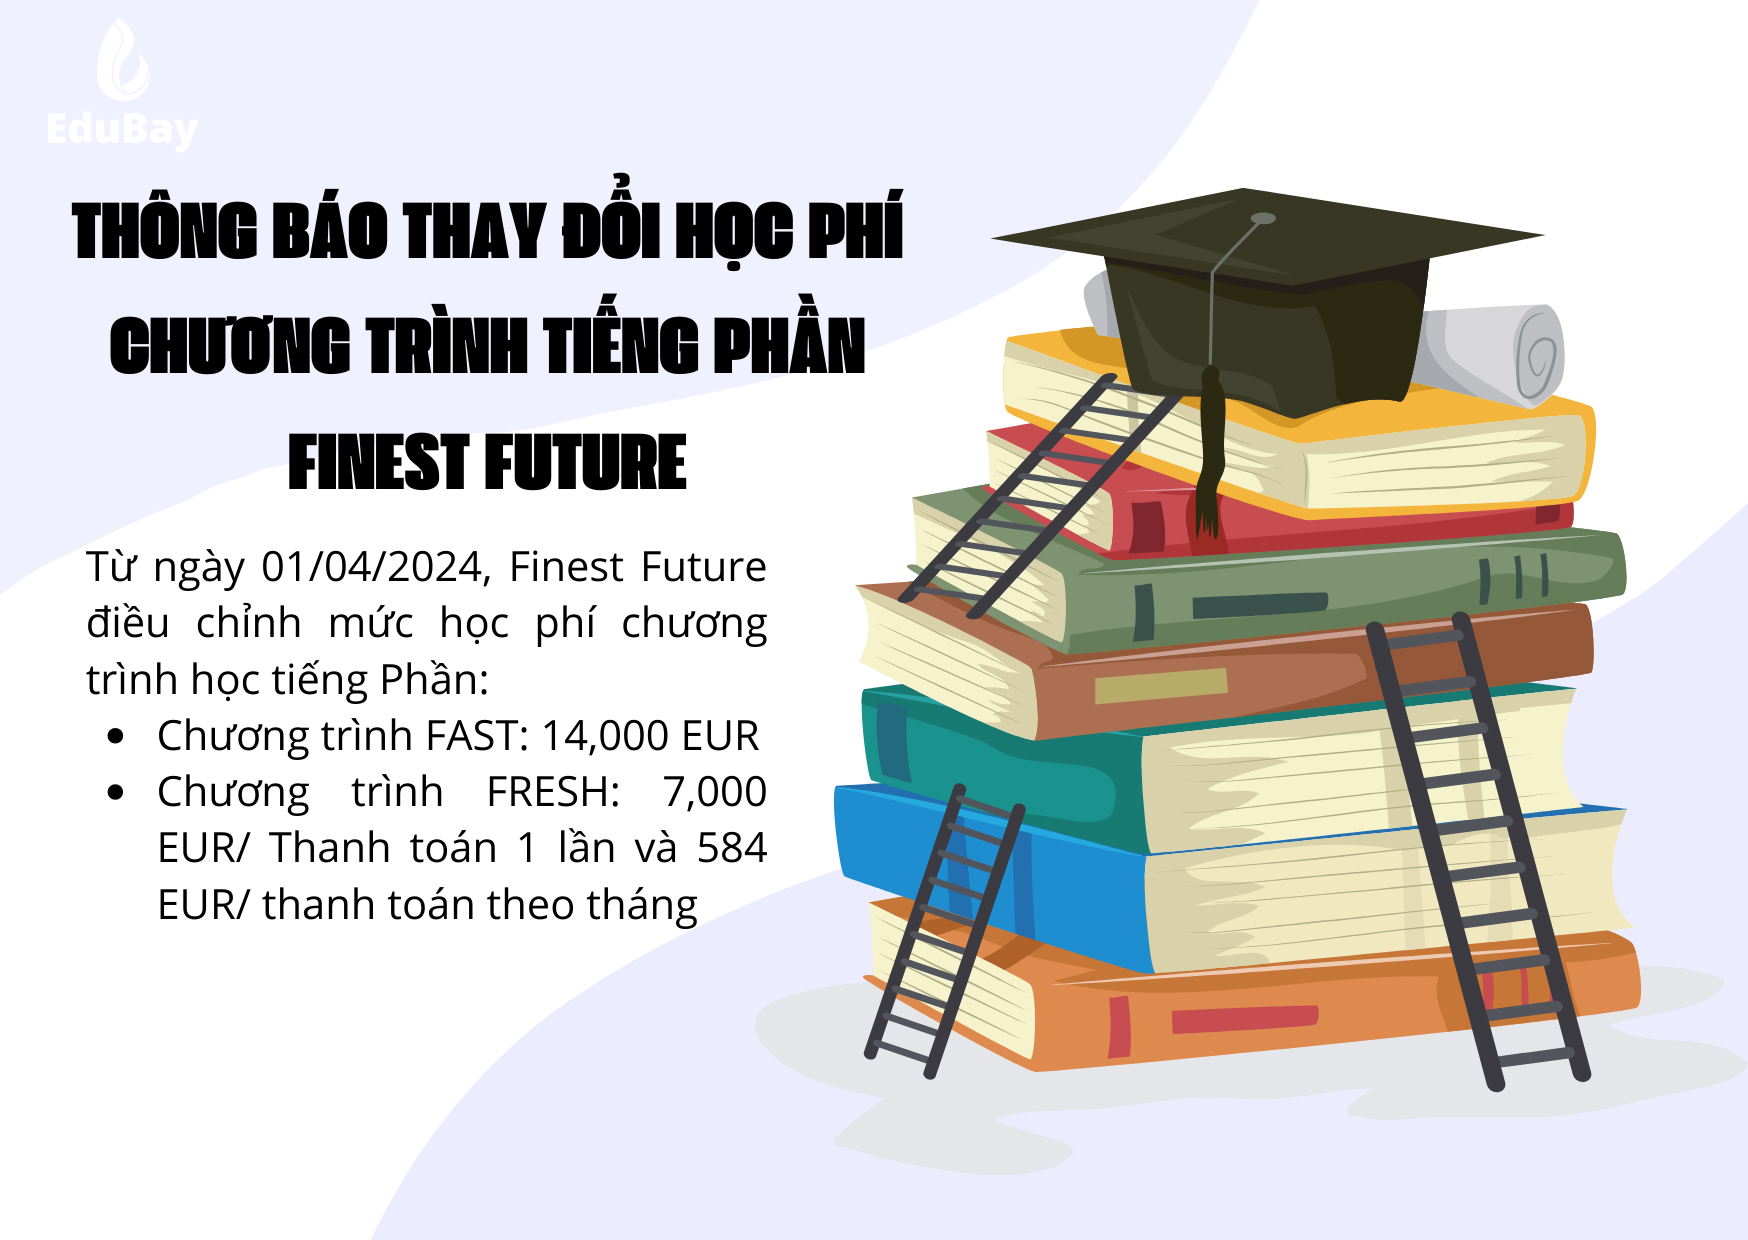 thong-bao-thay-doi-hoc-phi-chuong-trinh-tieng-phan-finest-future-1-1711594229.png